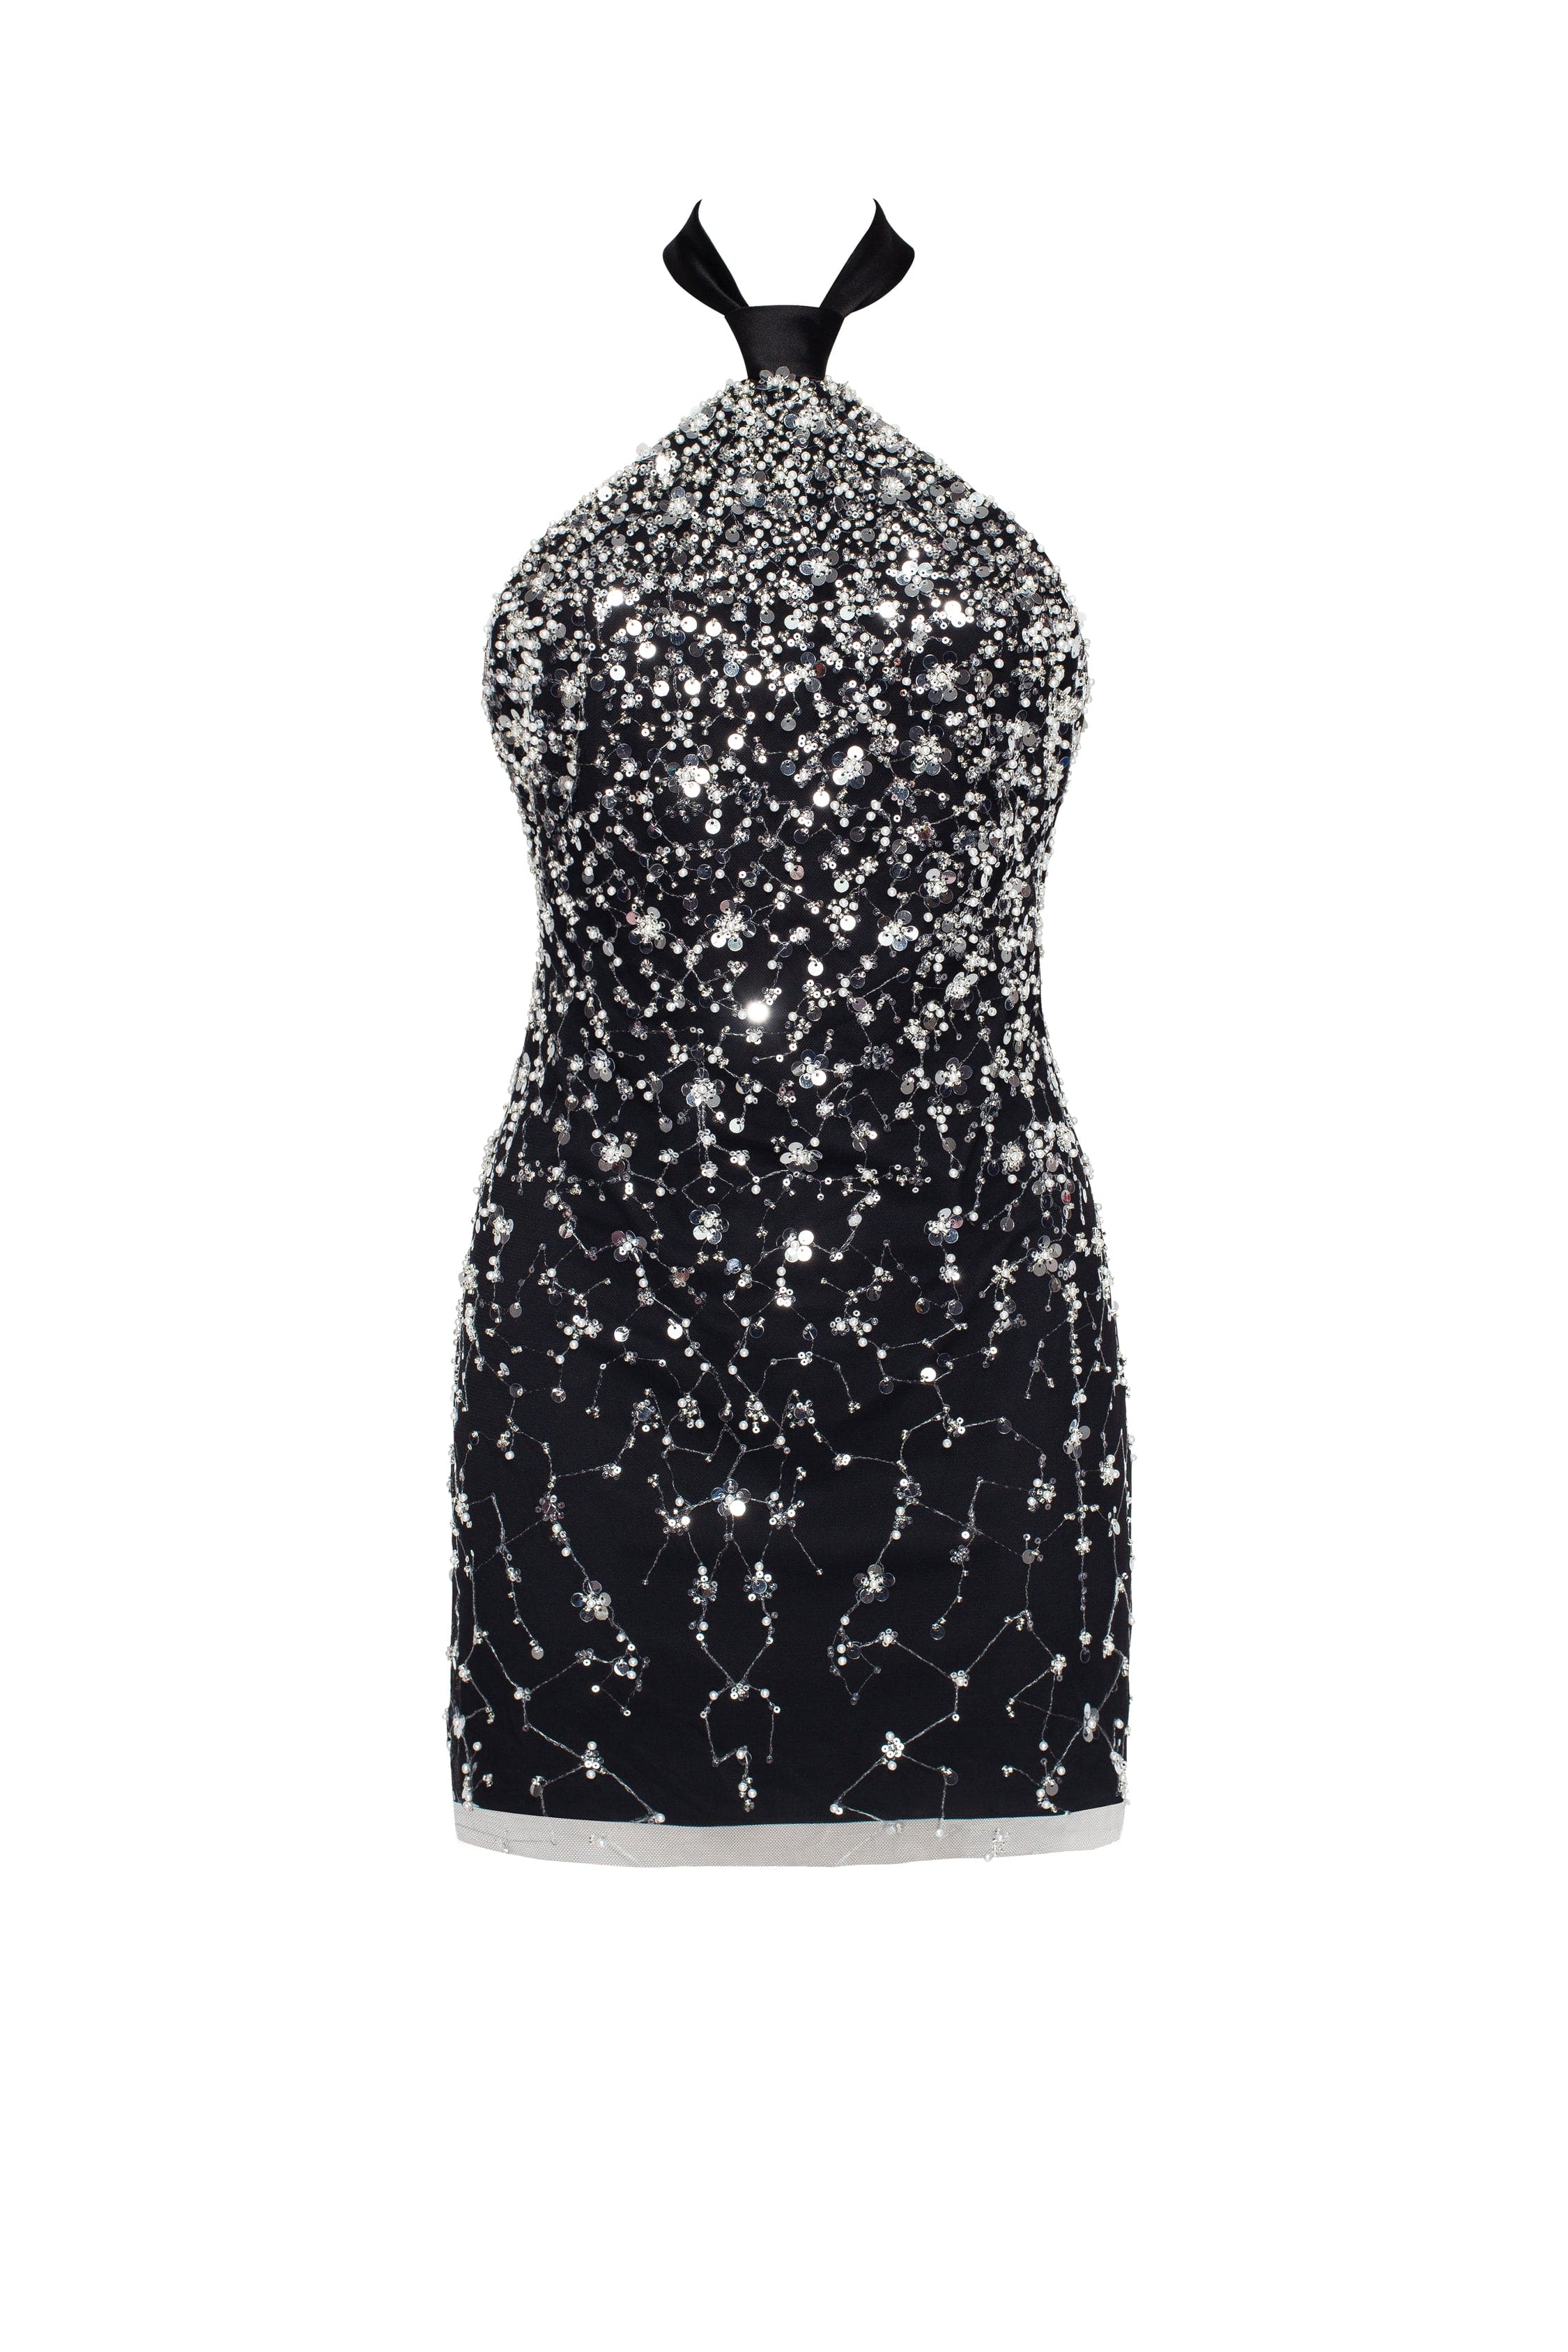 Striking halterneck crystal-embellished mini dress, Xo Xo ➤➤ Milla Dresses  - USA, Worldwide delivery